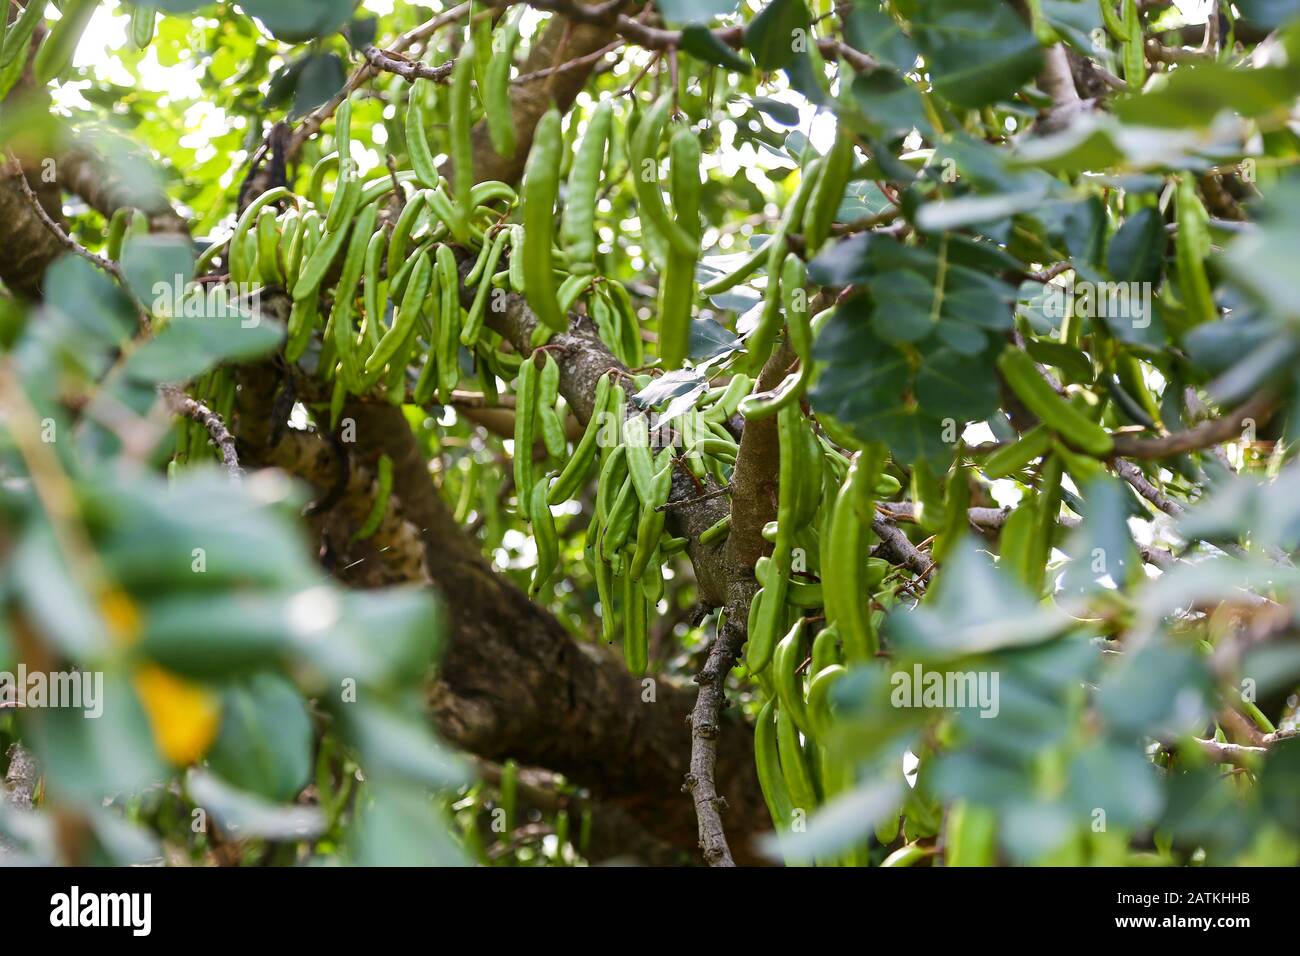 Long bean like pods of the Carob Tree (Ceratonia siliqua), a species of flowering evergreen tree in the pea family, Croatia Stock Photo